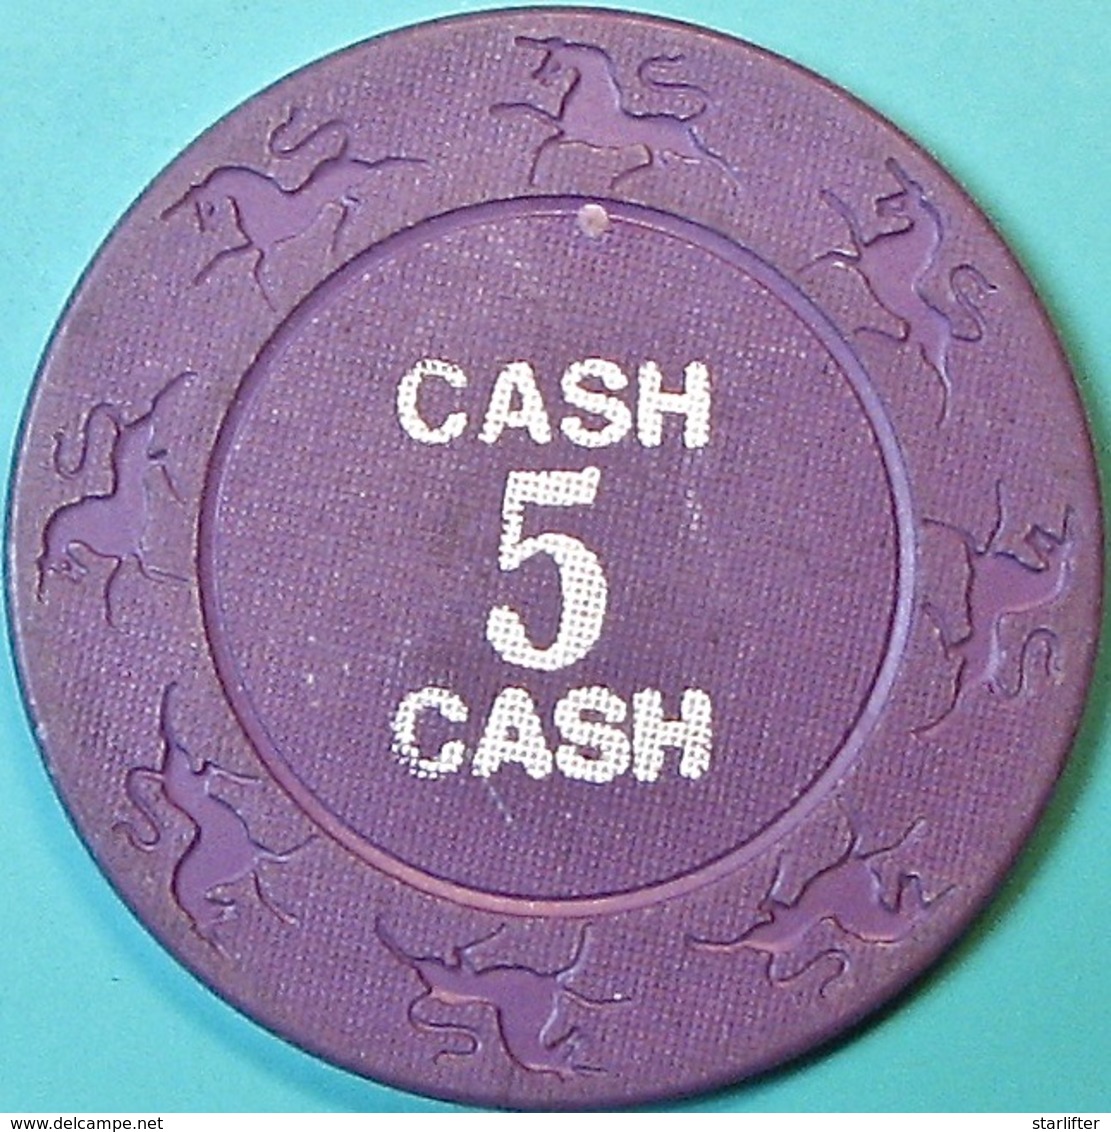 $5 Casino Chip. Grand Diamond, Poipet, Cambodia. Q04. - Casino